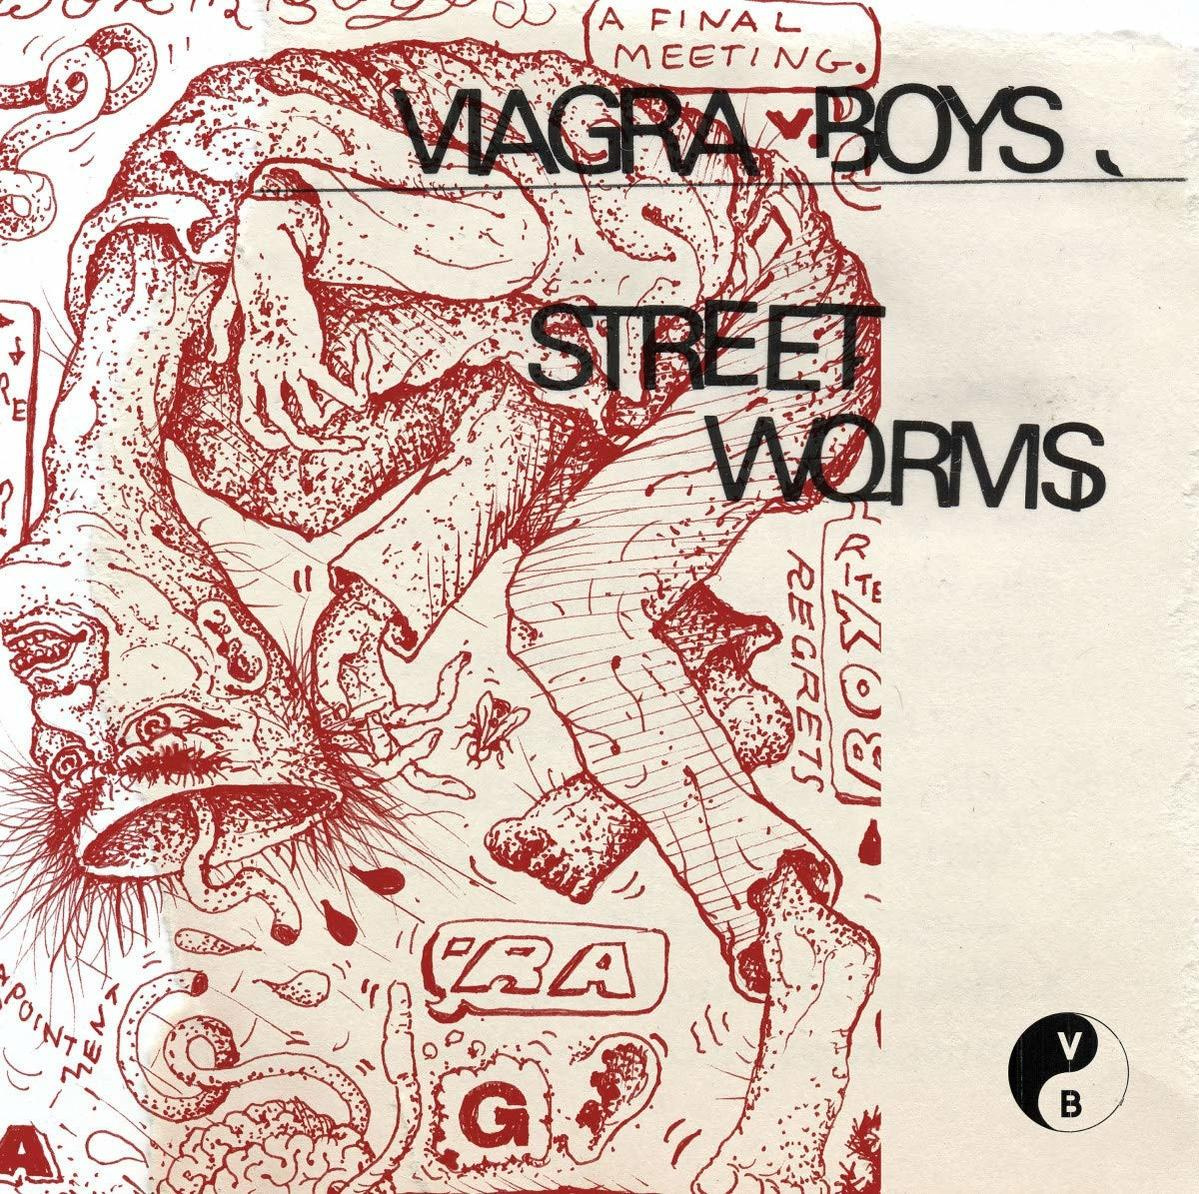 Boys - (Vinyl) Street Worms - Viagra